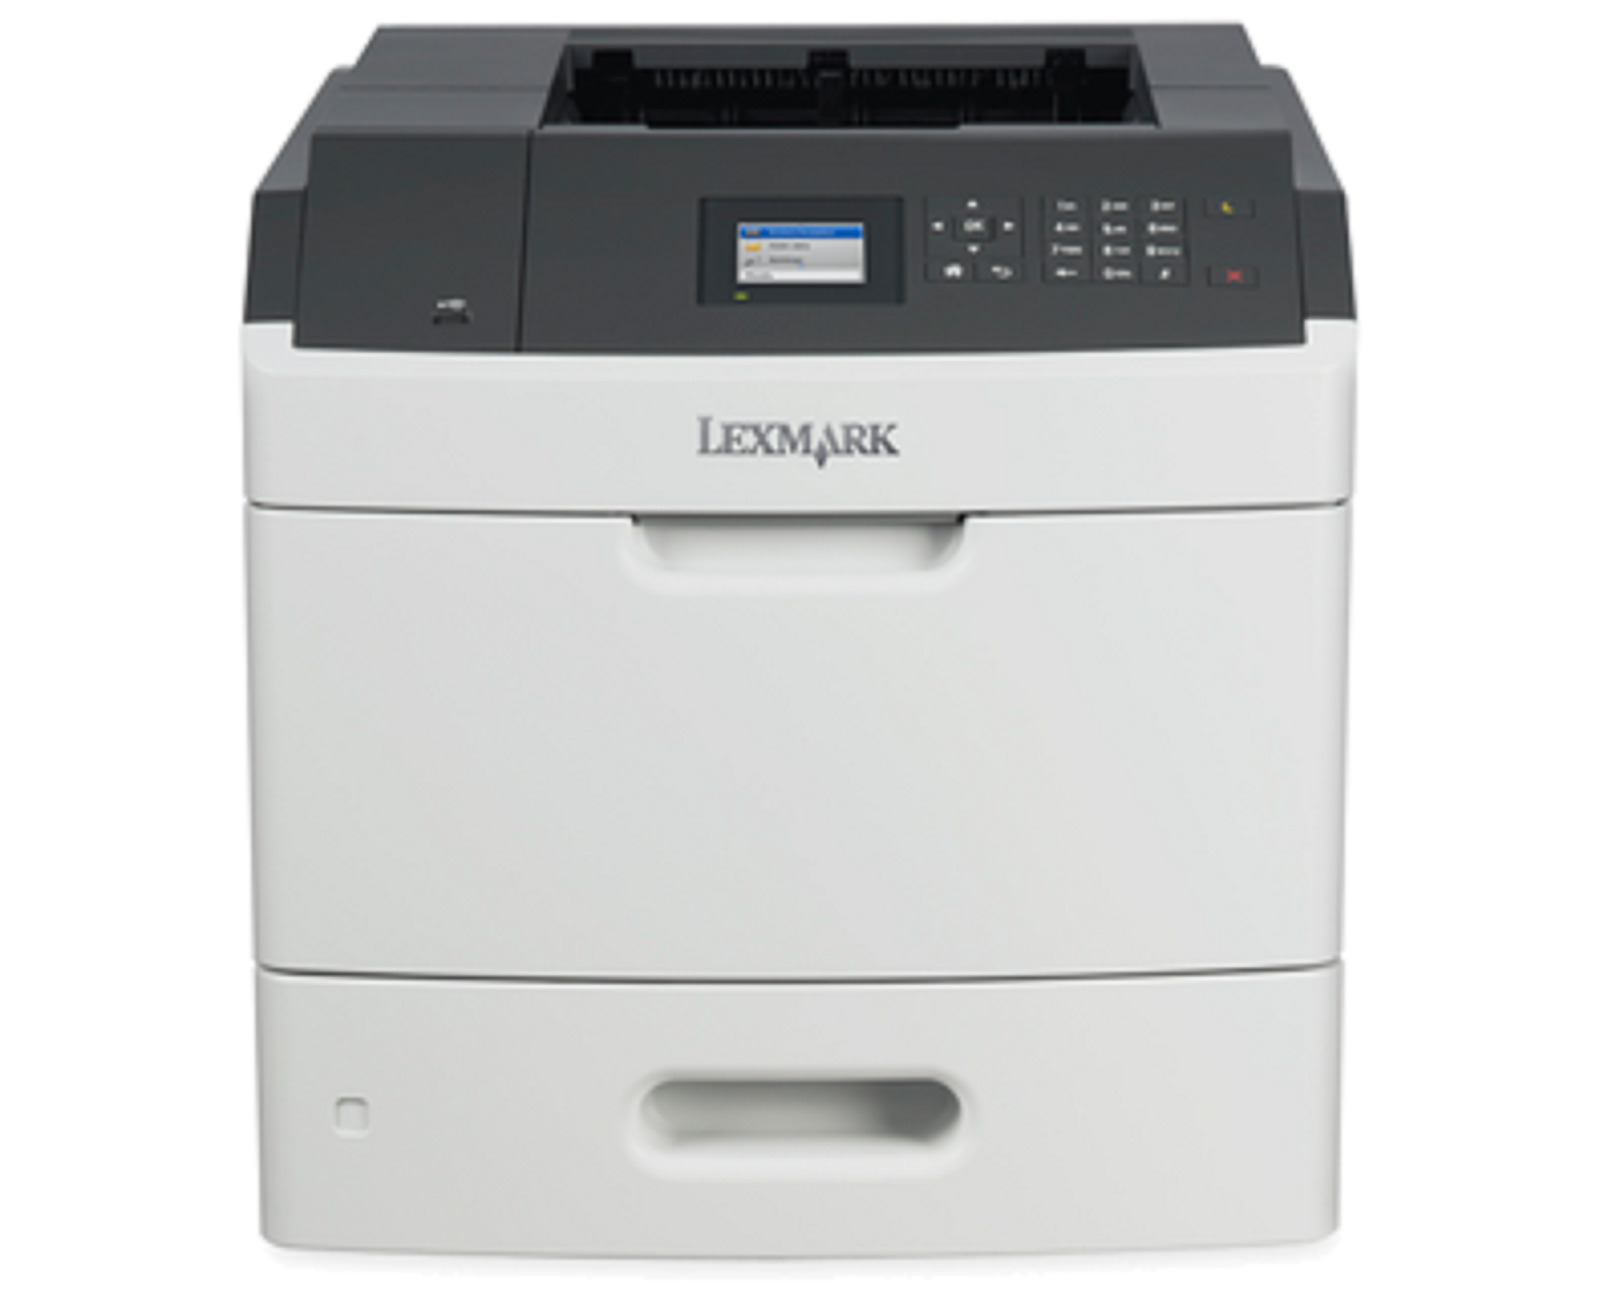 Lexmark MS810n -1Yr Warranty- Laser Printer - Reconditioned -  Very Good